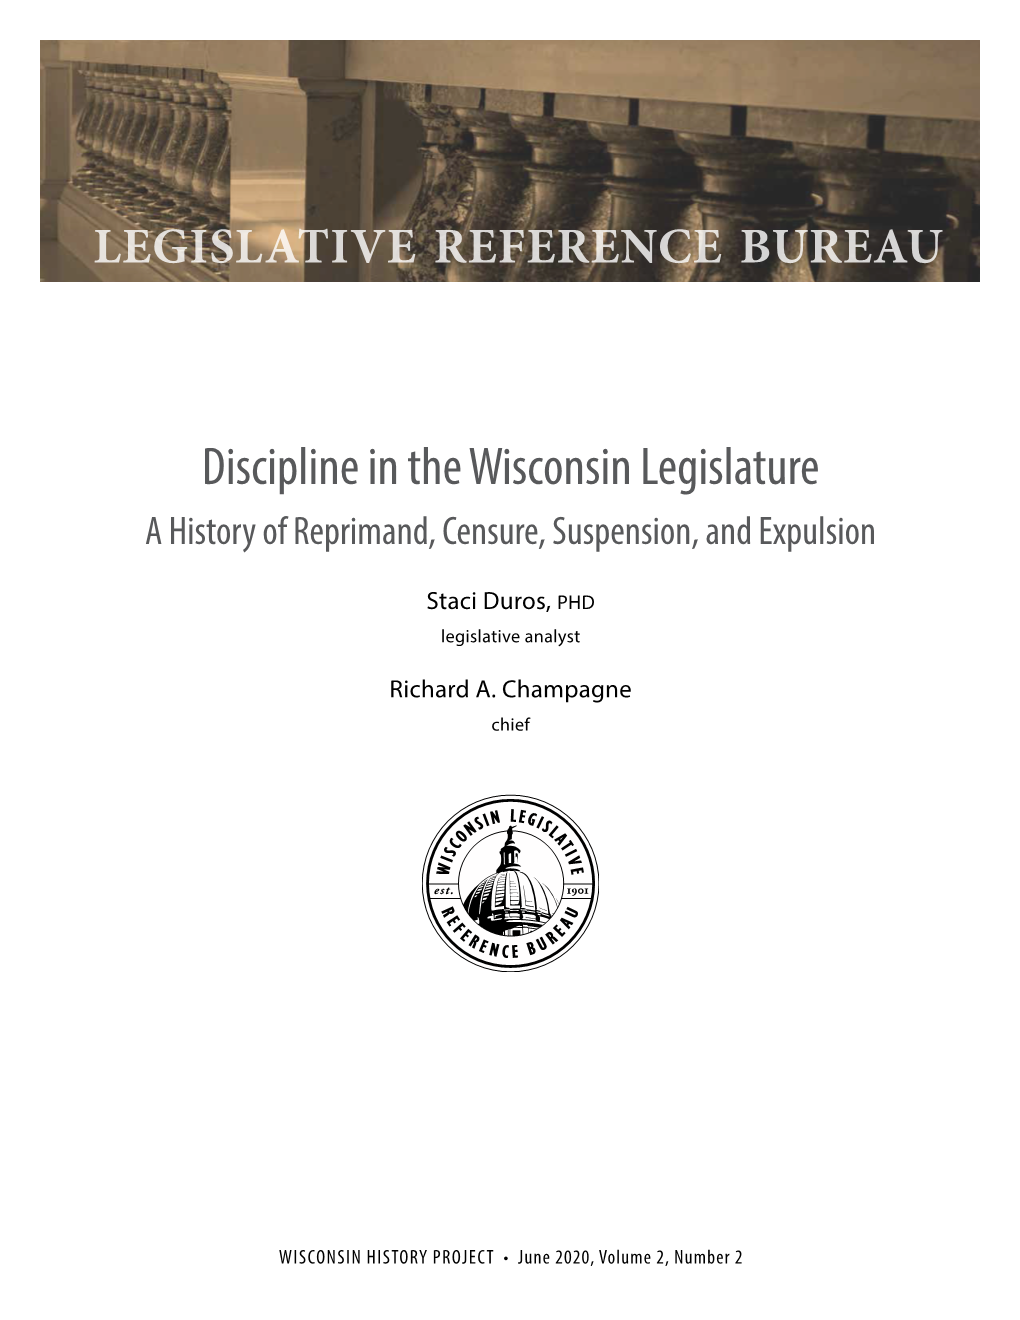 Discipline in the Wisconsin Legislature a History of Reprimand, Censure, Suspension, and Expulsion